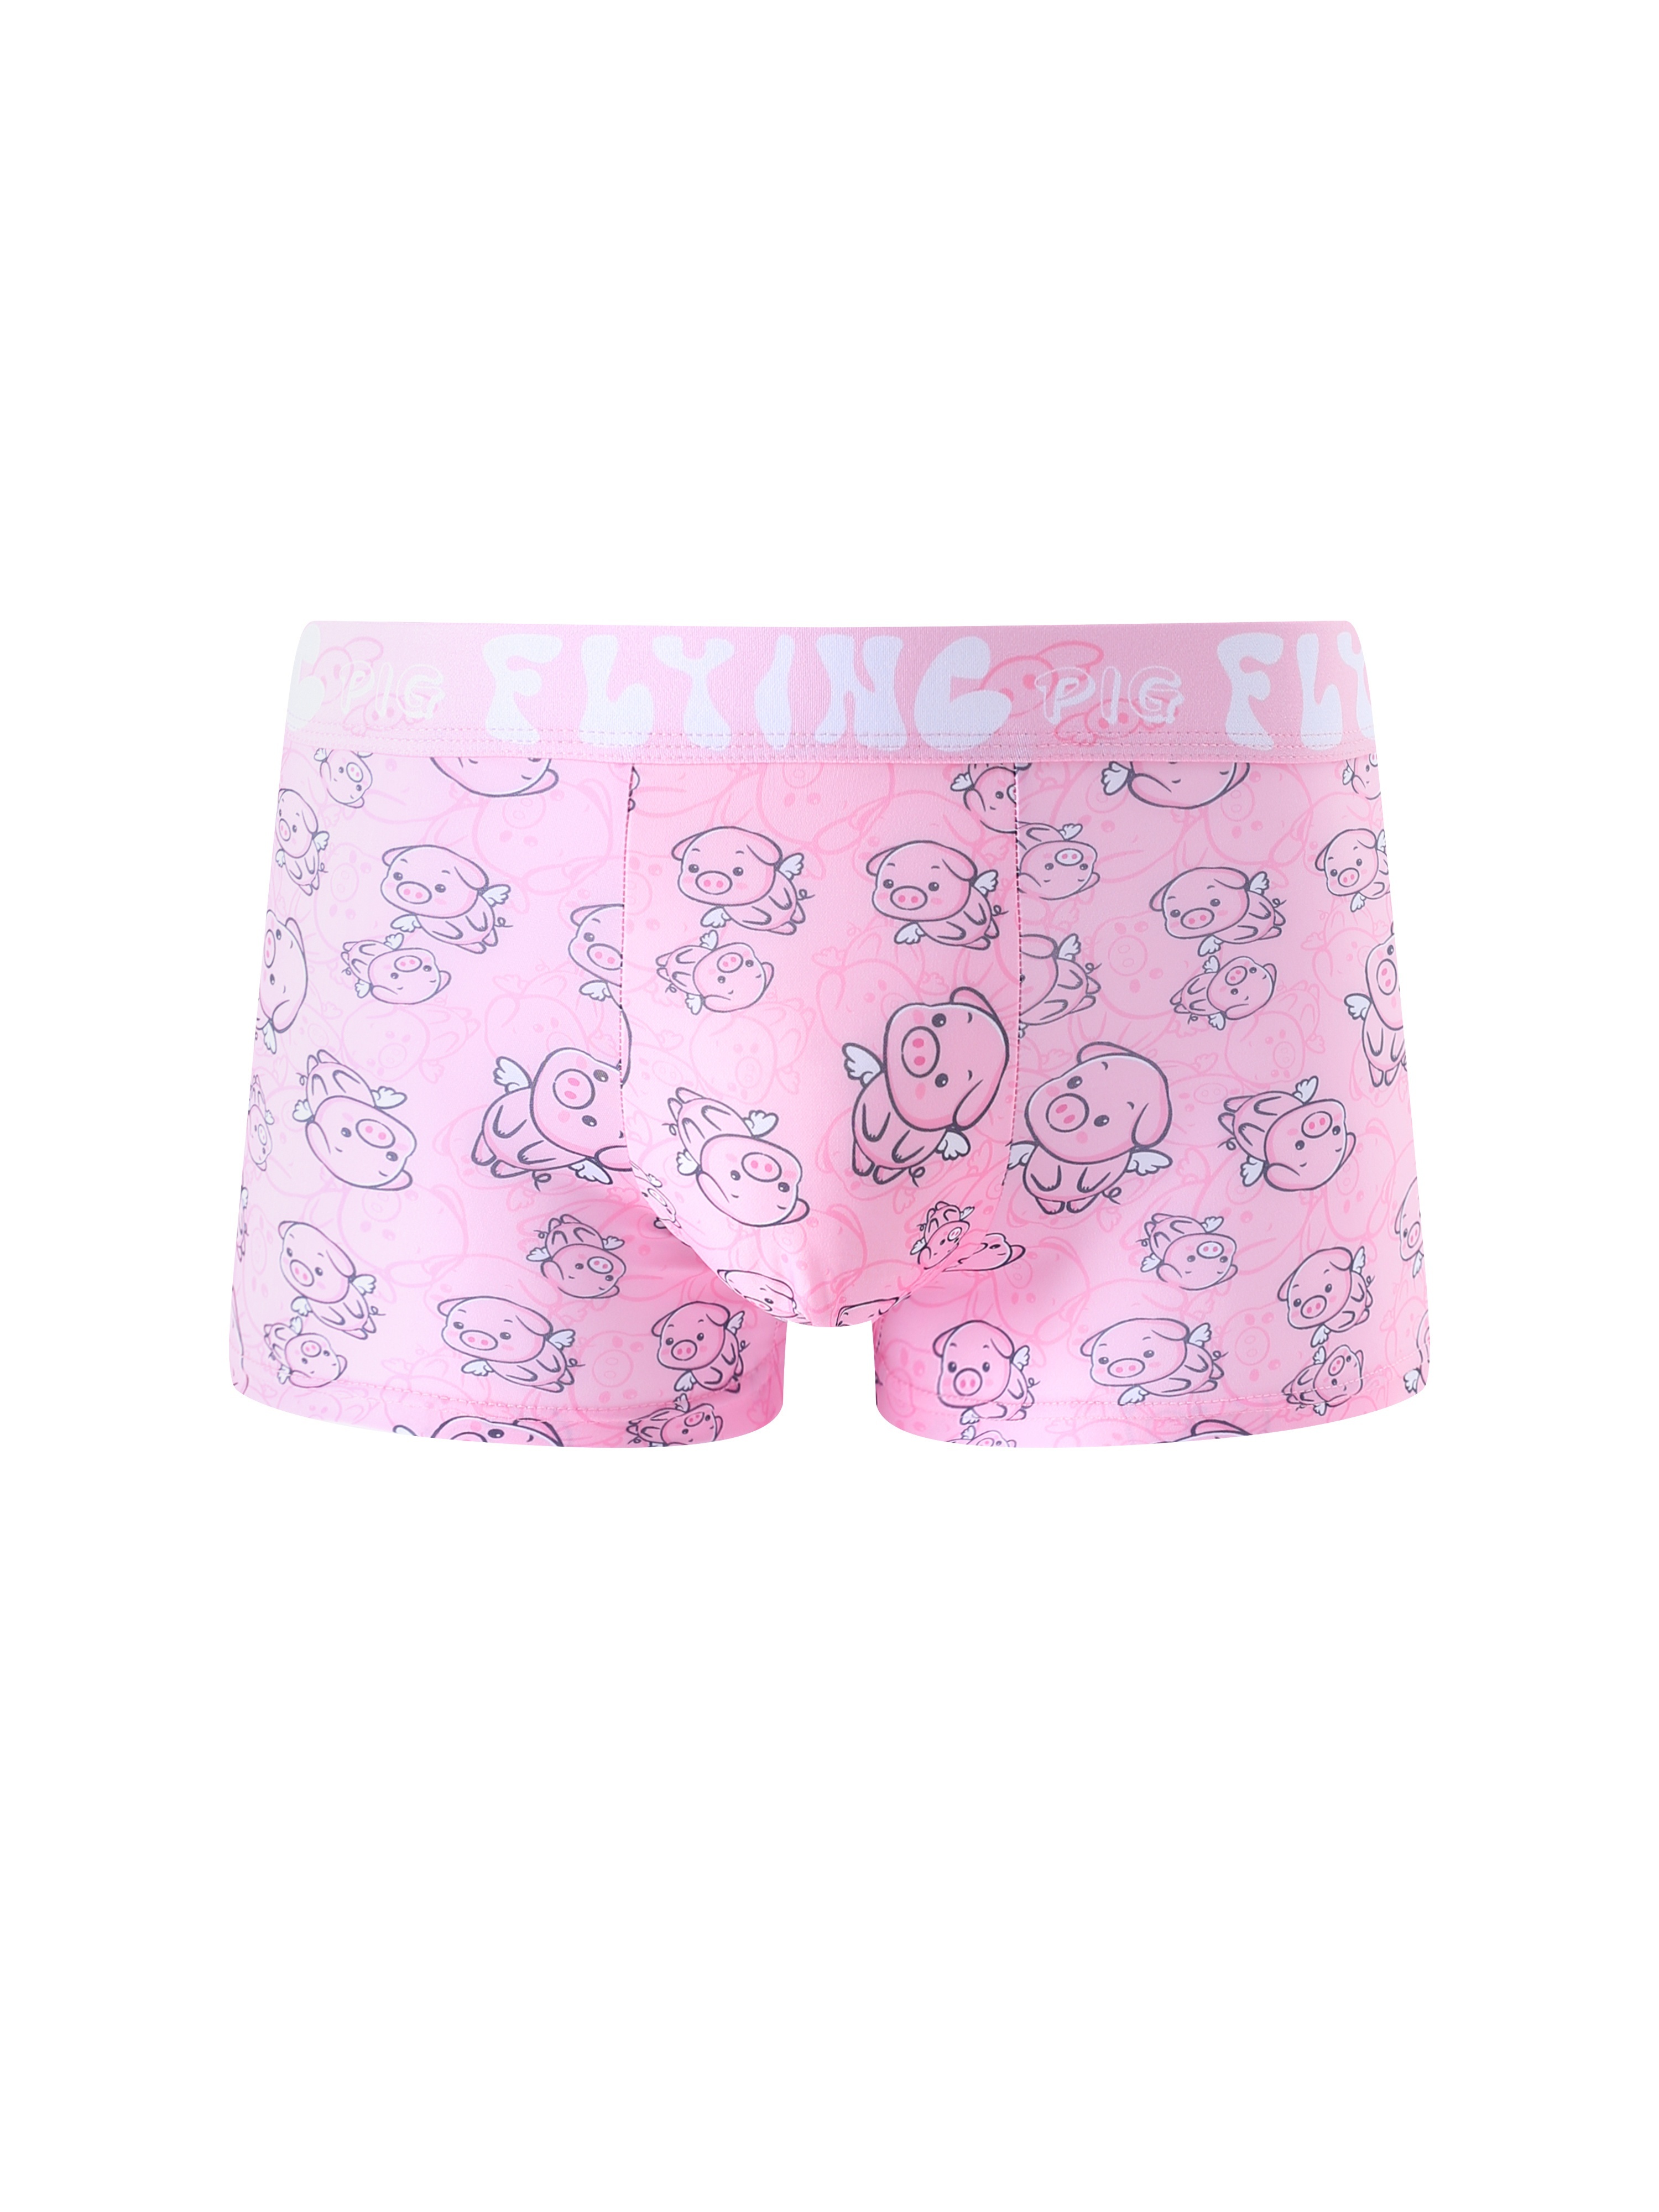 Hello Kitty Boxer Underwear Shorts Little Twin Stars Sanrio Melody L Soft  Briefs